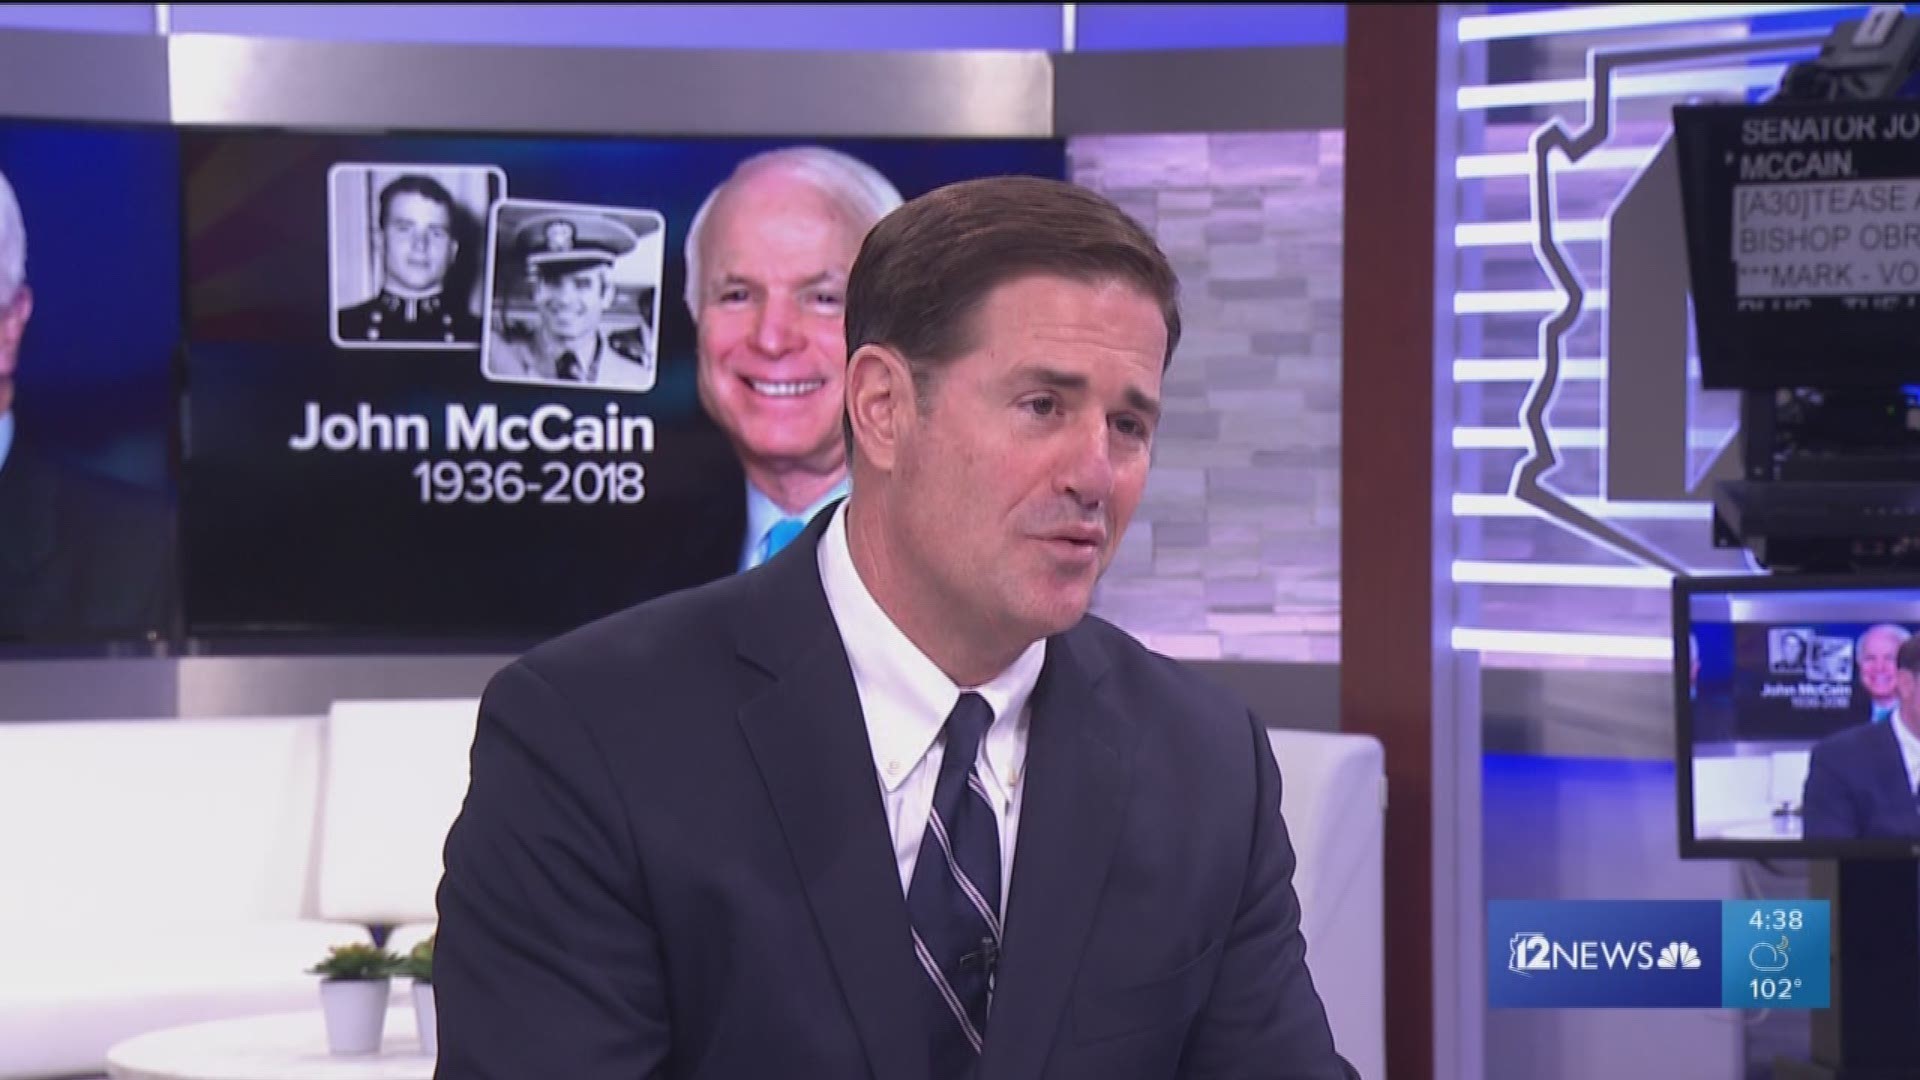 Arizona Governor Doug Ducey remembers Senator John McCain. Ducey says McCain set a great example to Arizona's politicians.